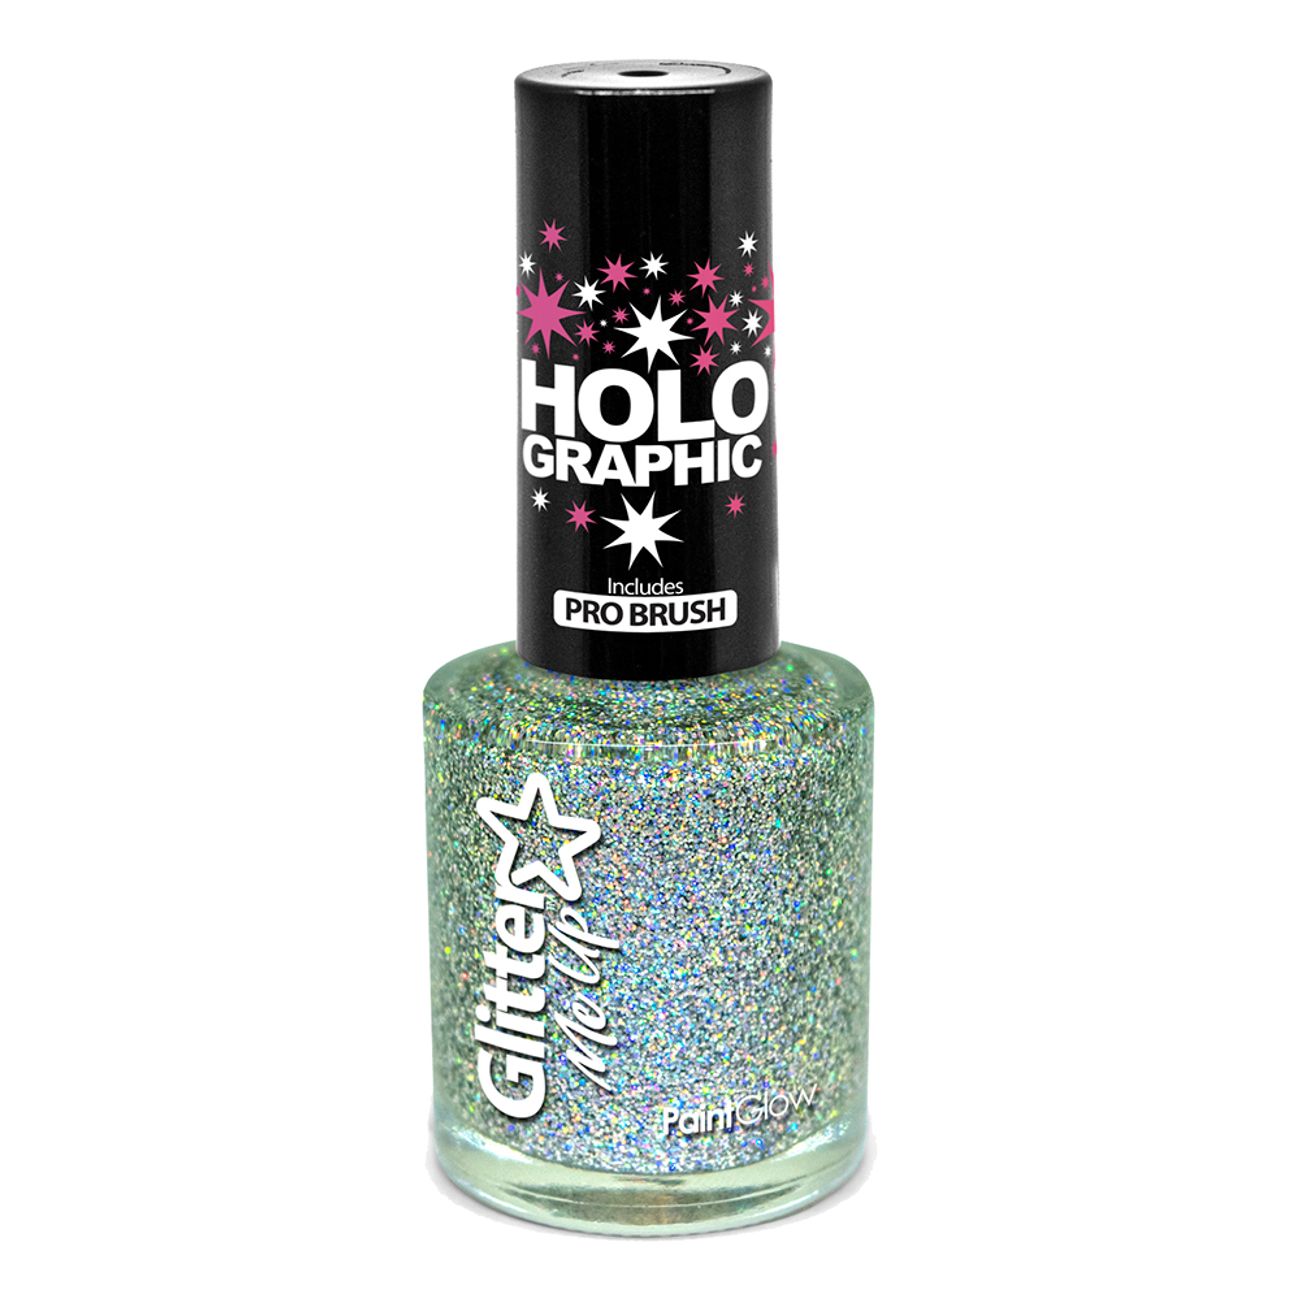 paintglow-holografisk-glitter-nail-polish-10ml-loose-5